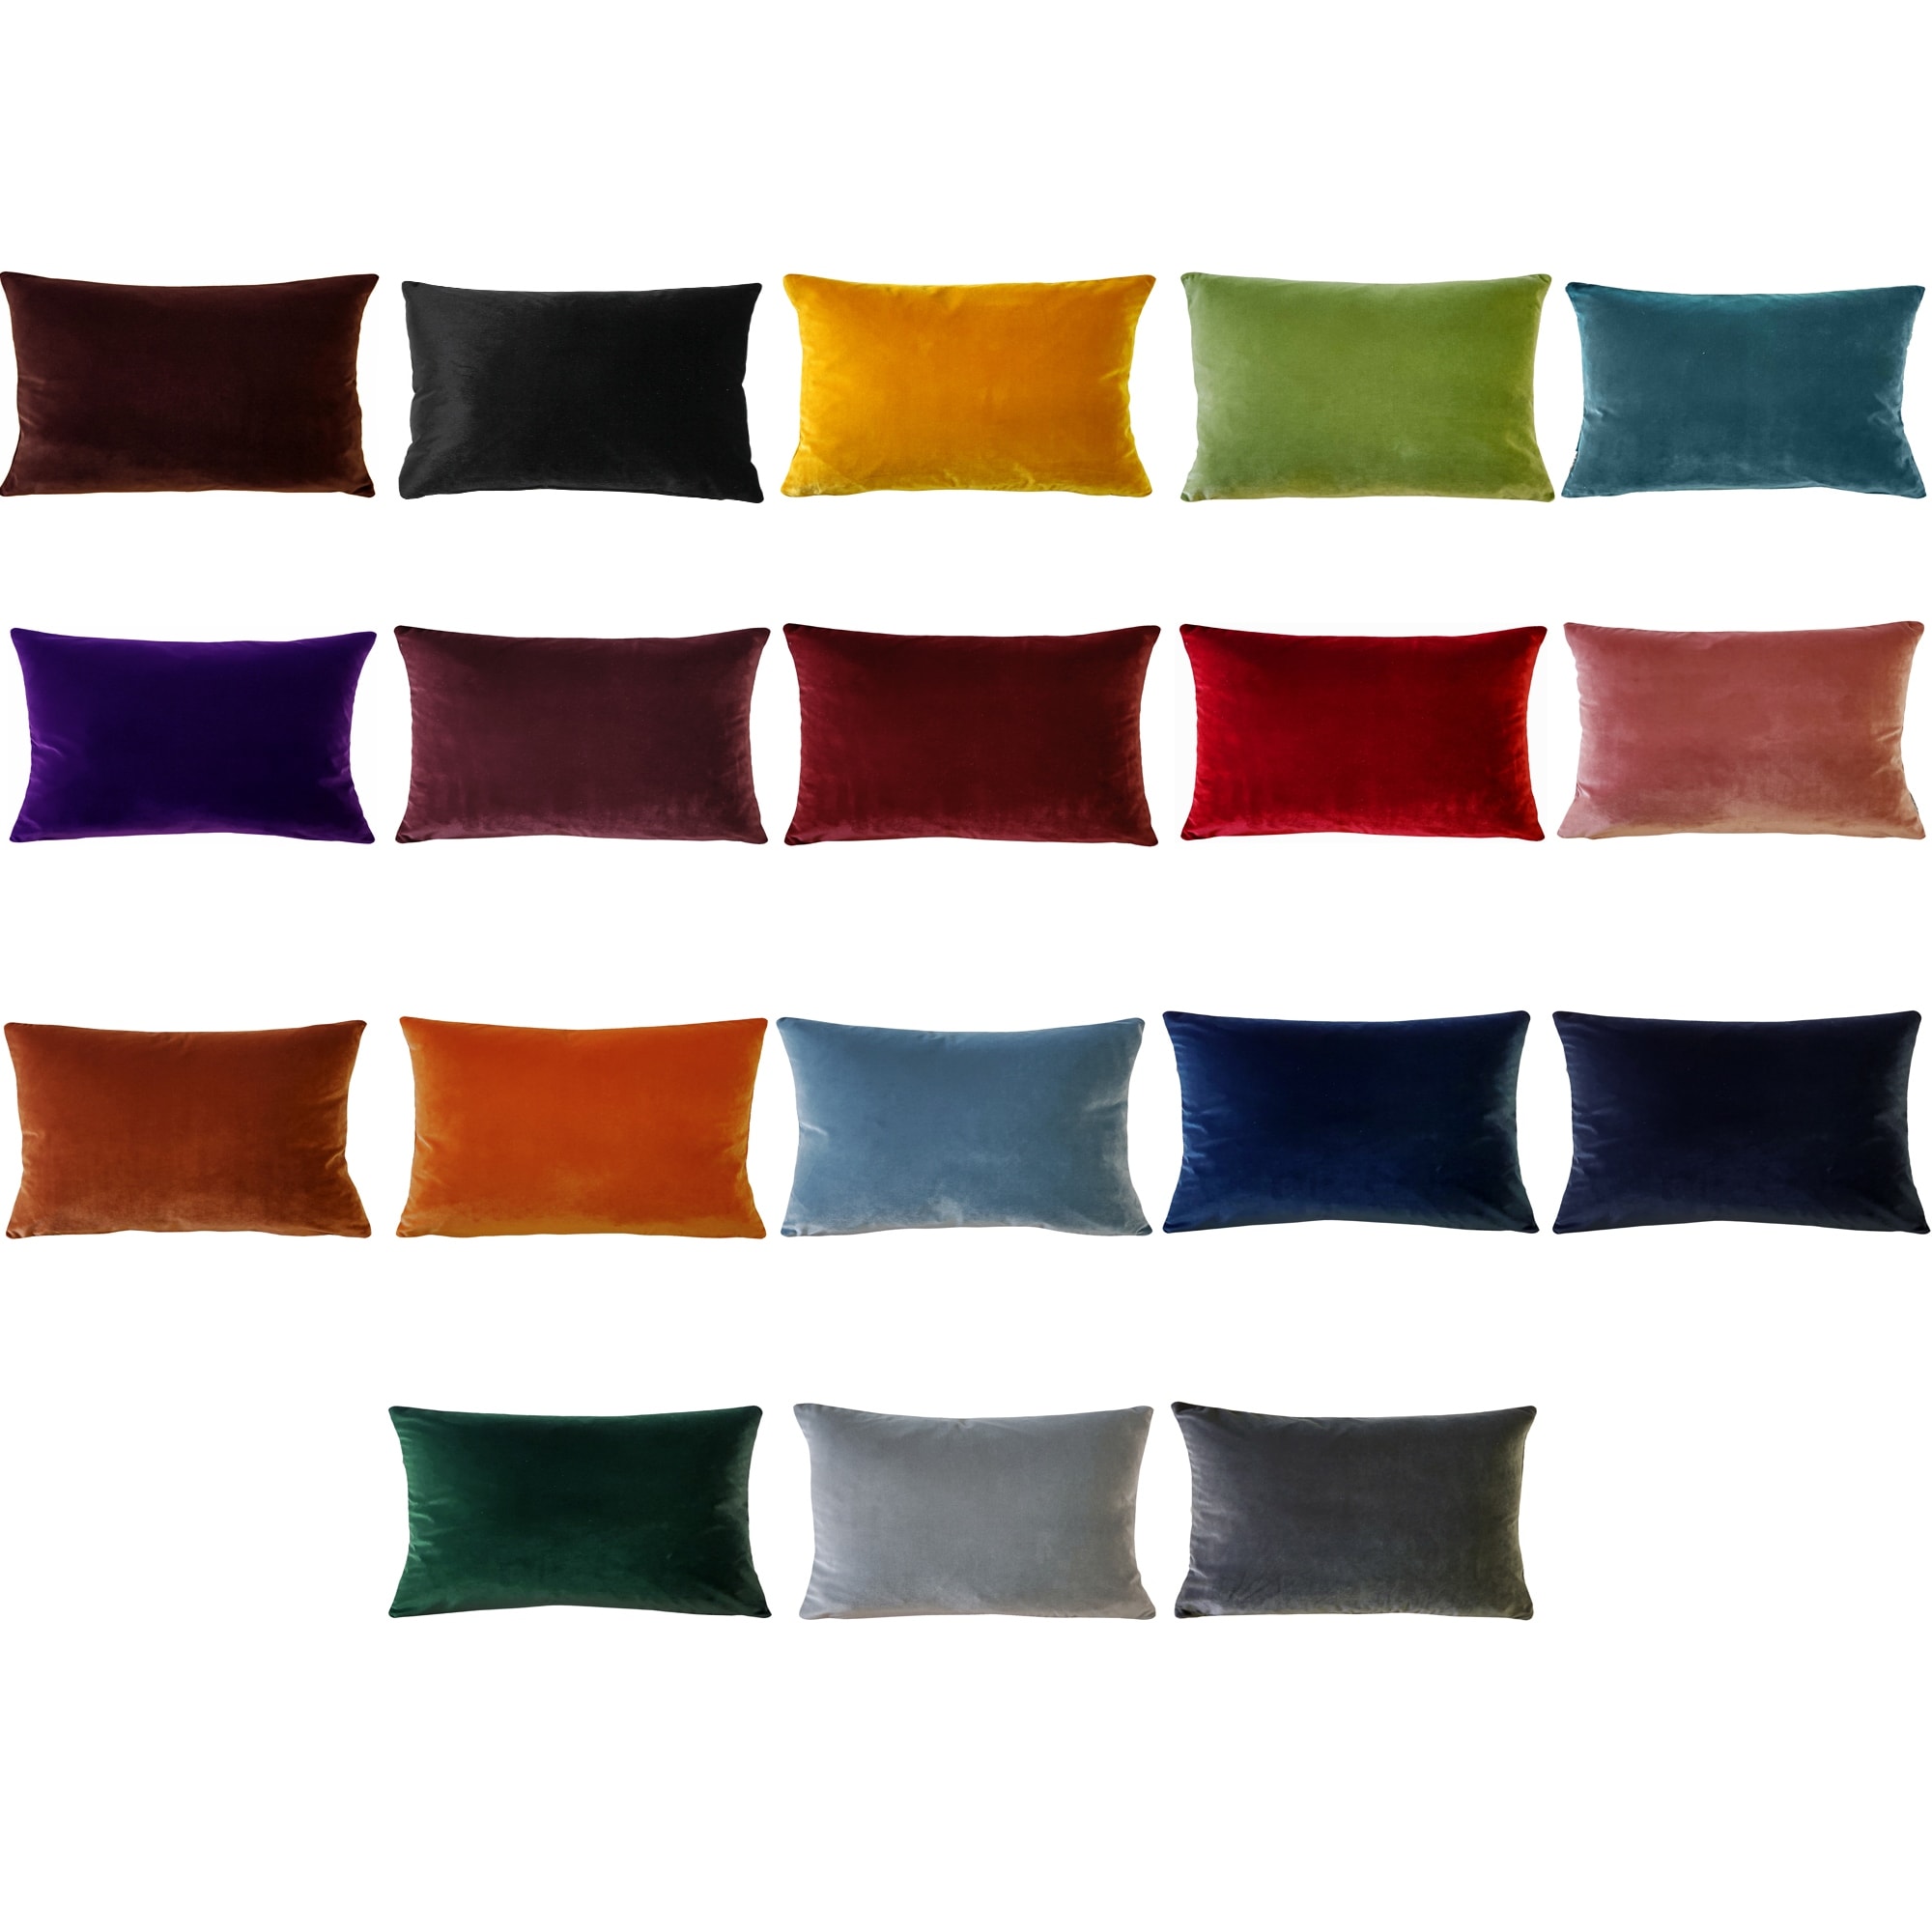 https://ak1.ostkcdn.com/images/products/is/images/direct/6969ba1826030c1bbc1823389c7122b0420f1352/Pillow-Decor-Castello-Soft-Velvet-Throw-Pillows-%283-Sizes%2C-18-Colors%29.jpg